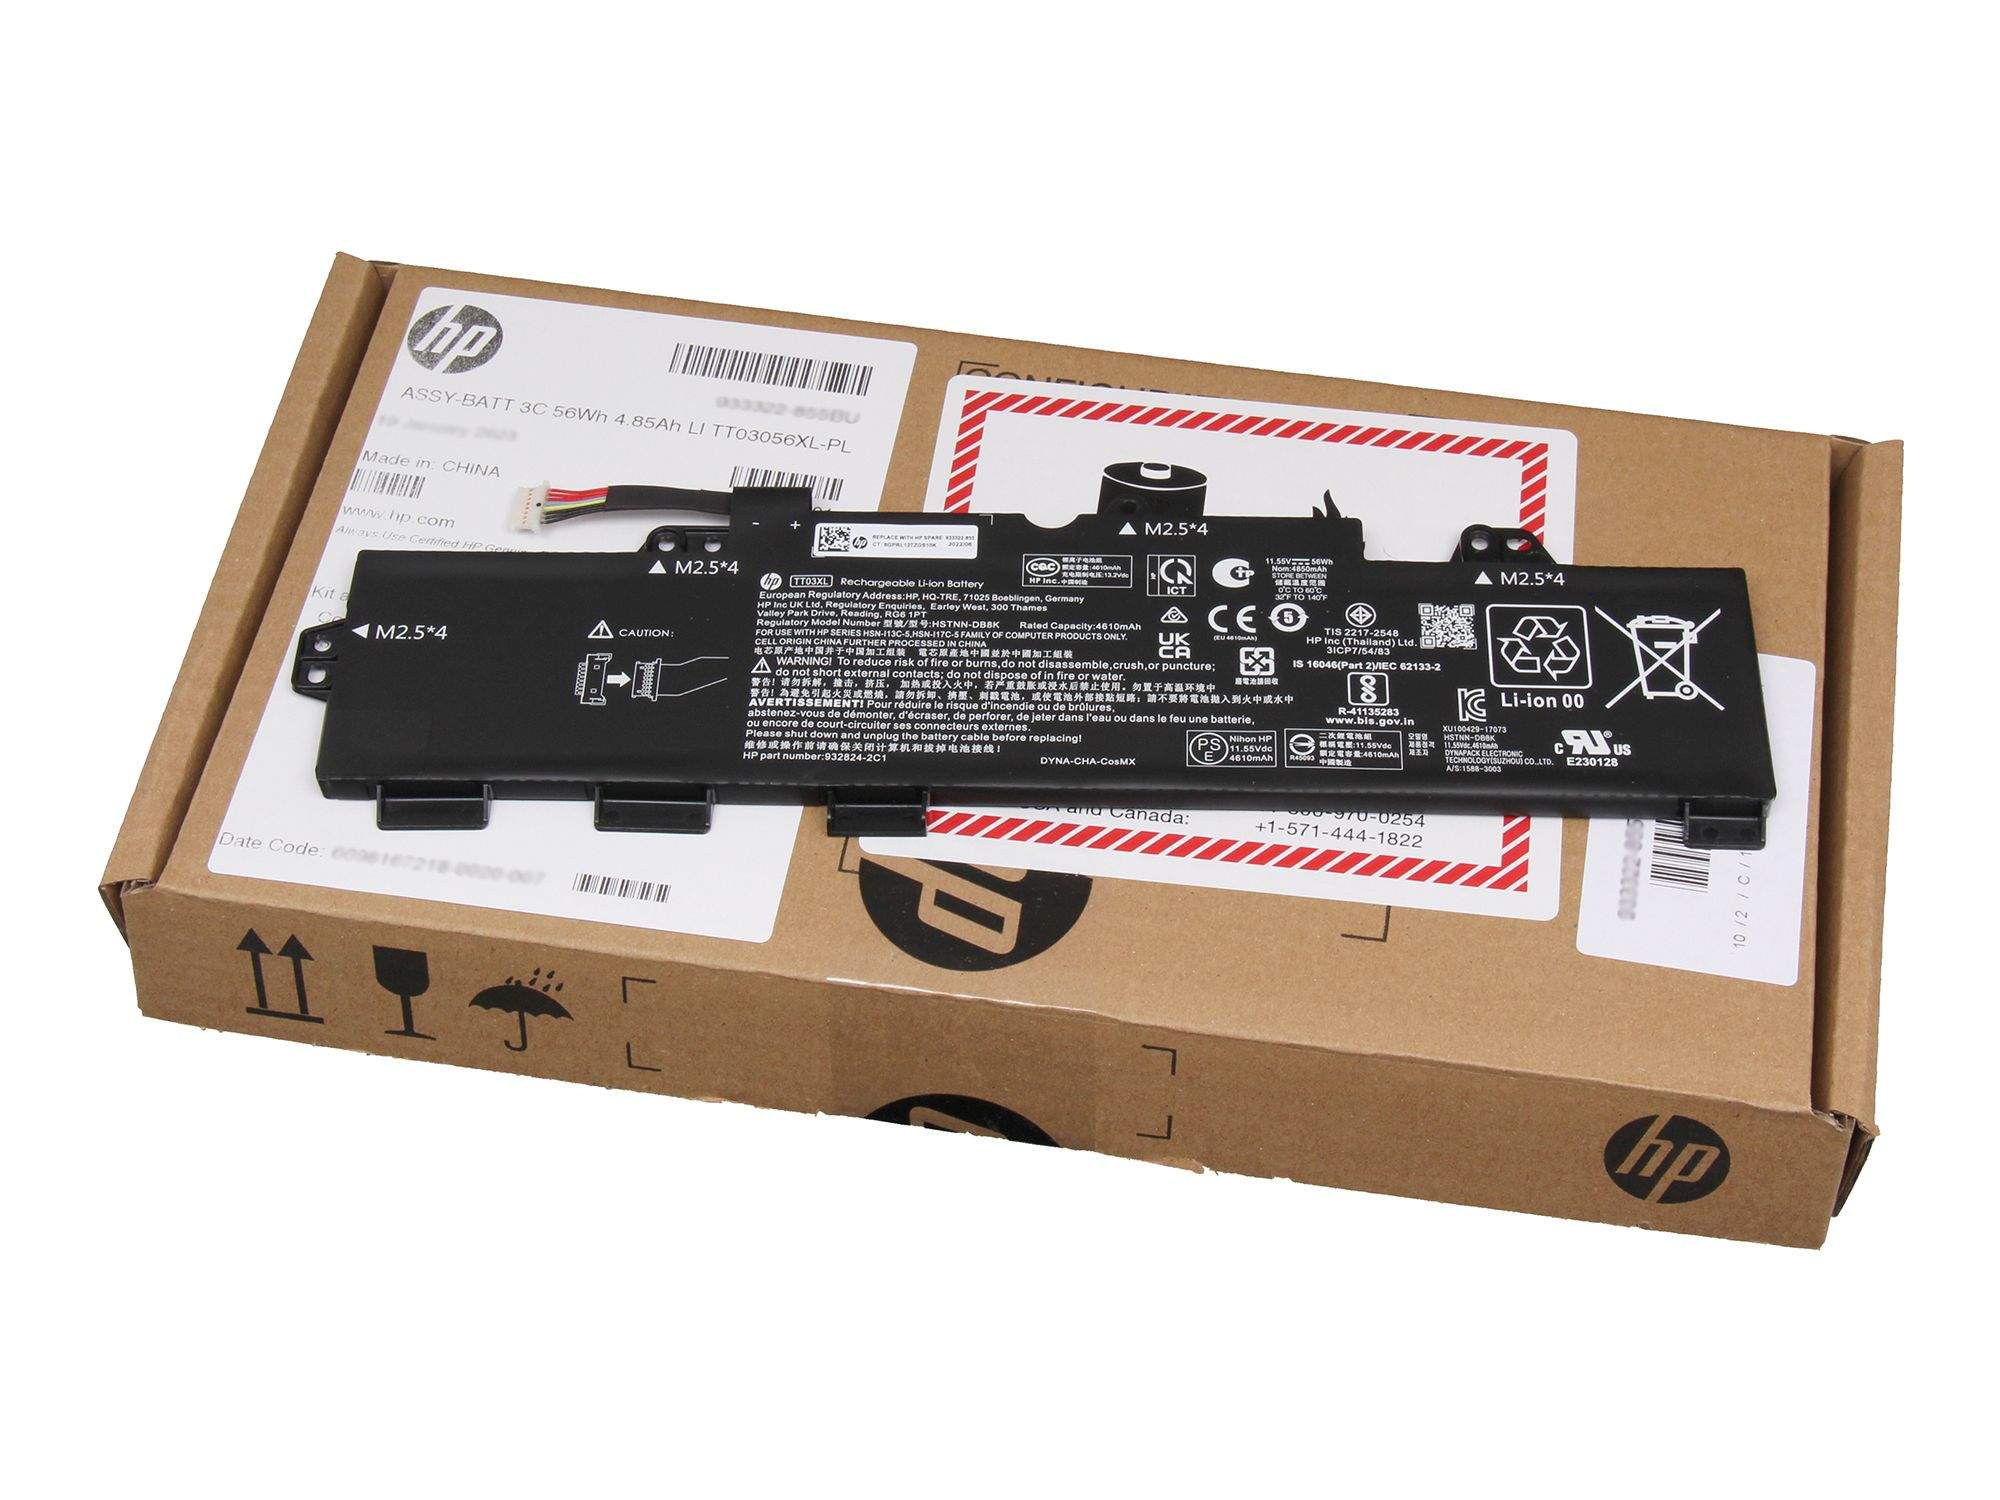 HP Battery 3C 56W 4.85A LI